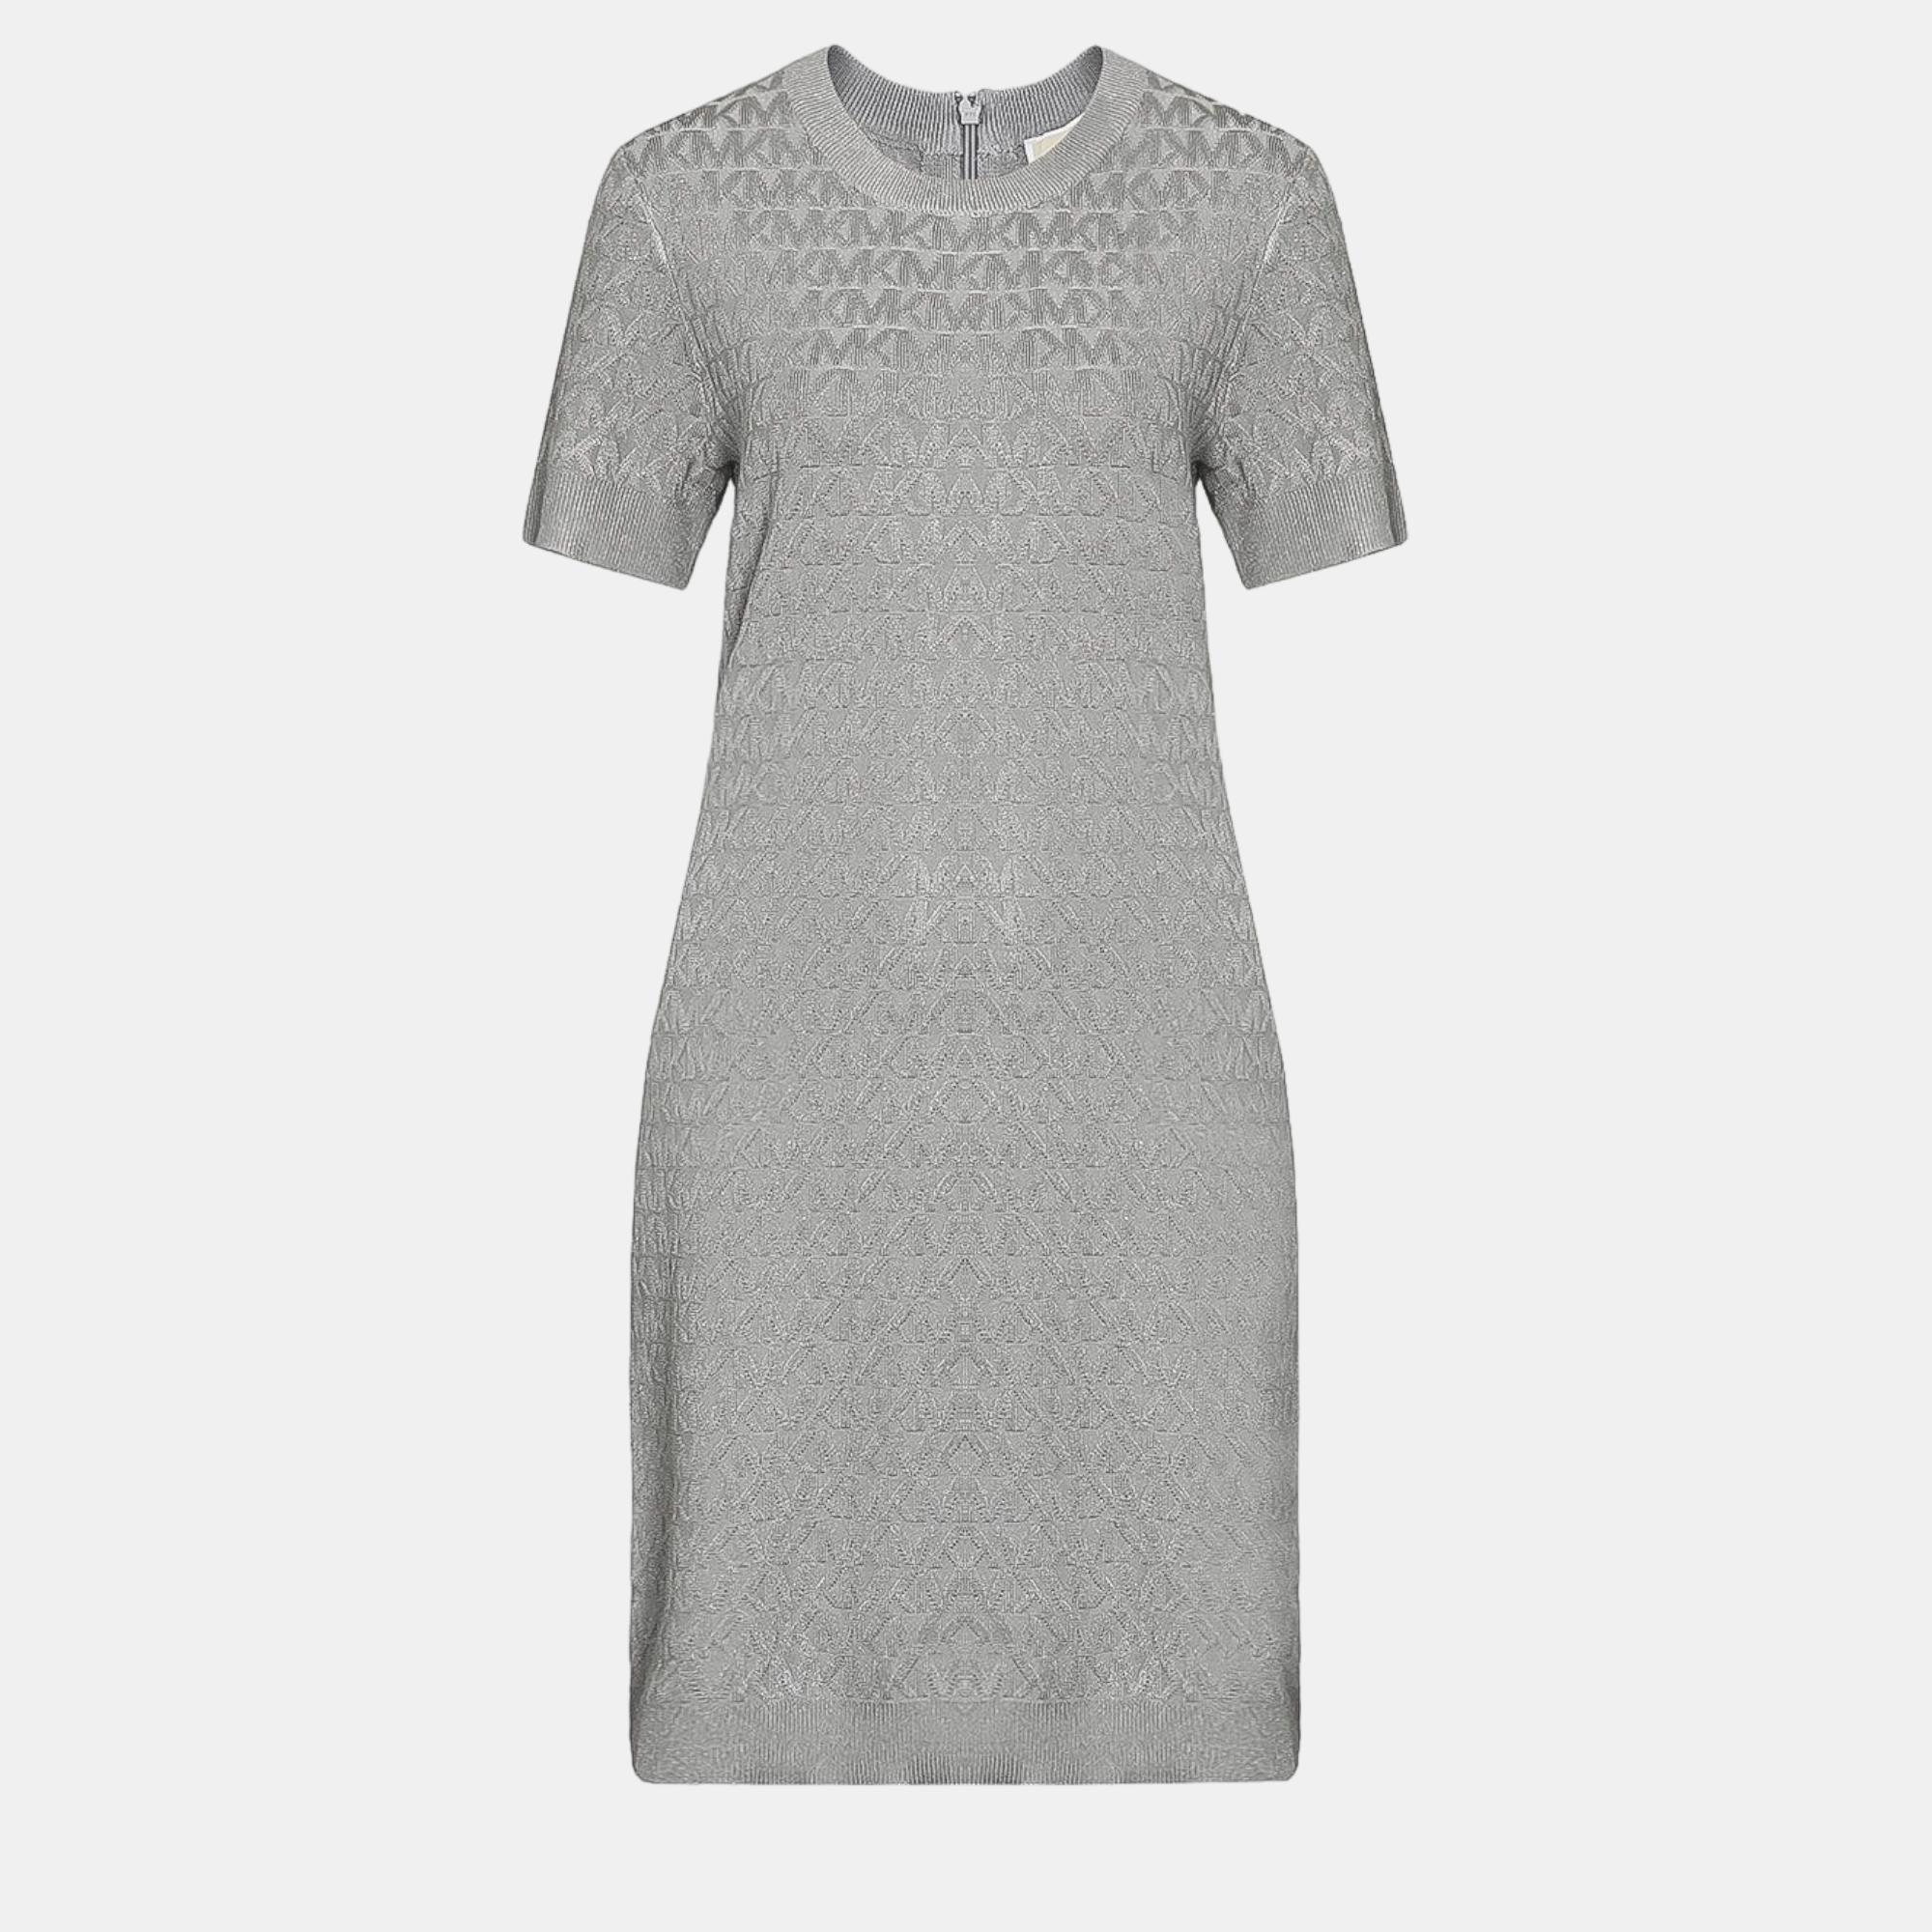 

Michael Kors Grey Metallic Knit Short Dress